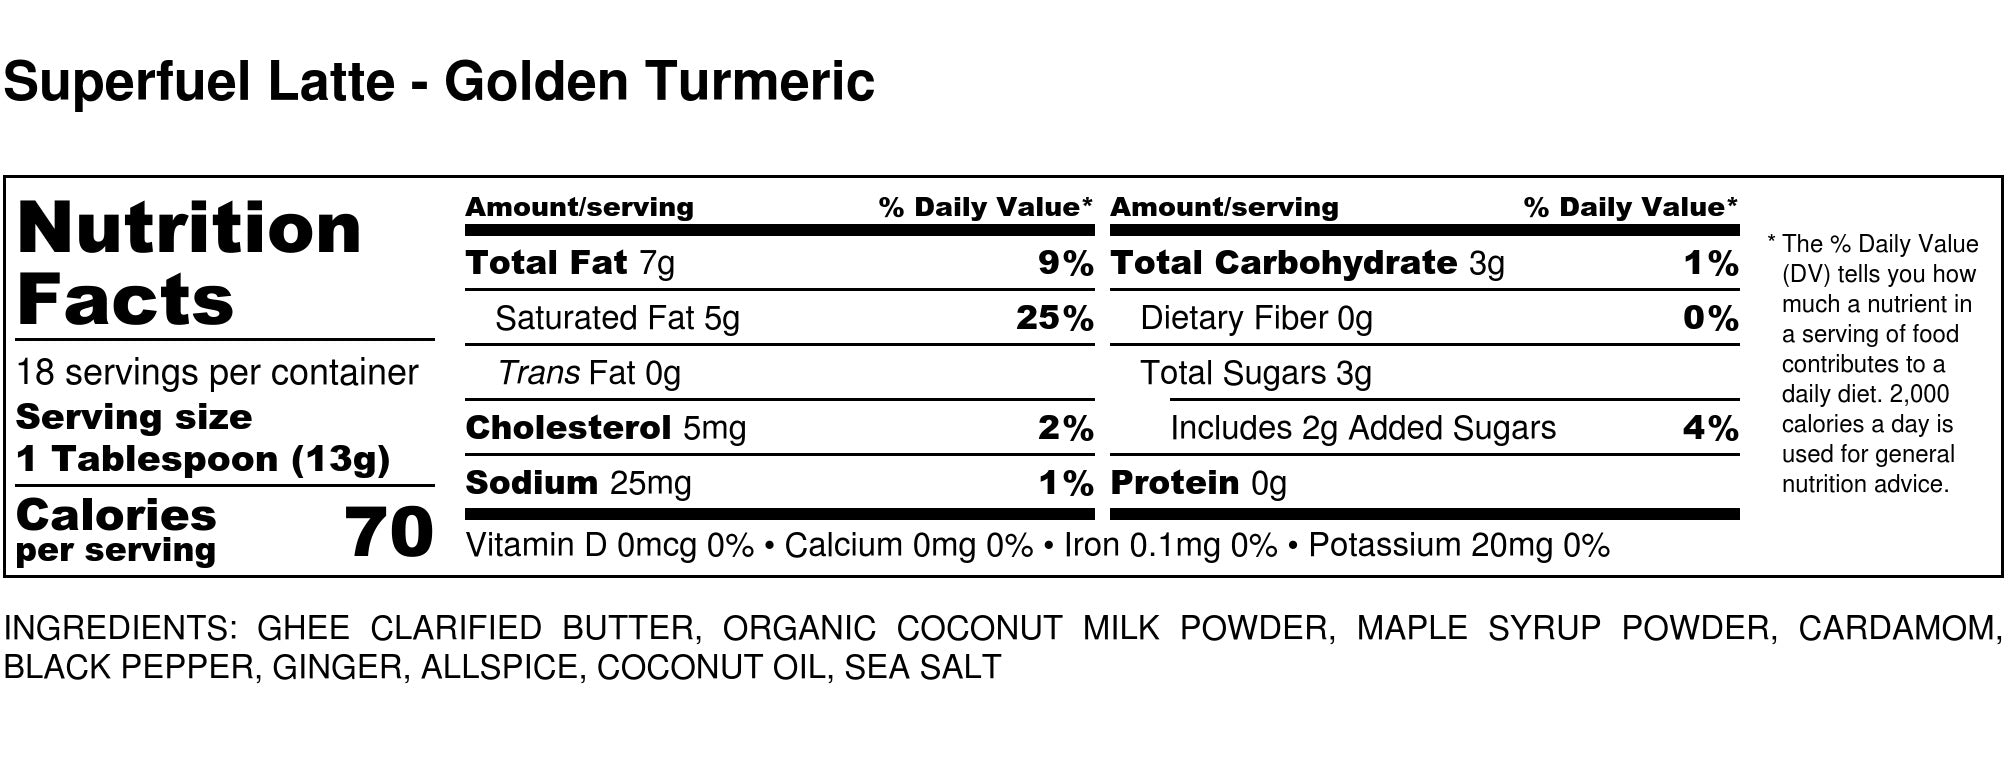 Copy_of_Superfuel_Latte_-_Golden_Turmeric_-_Nutrition_Label